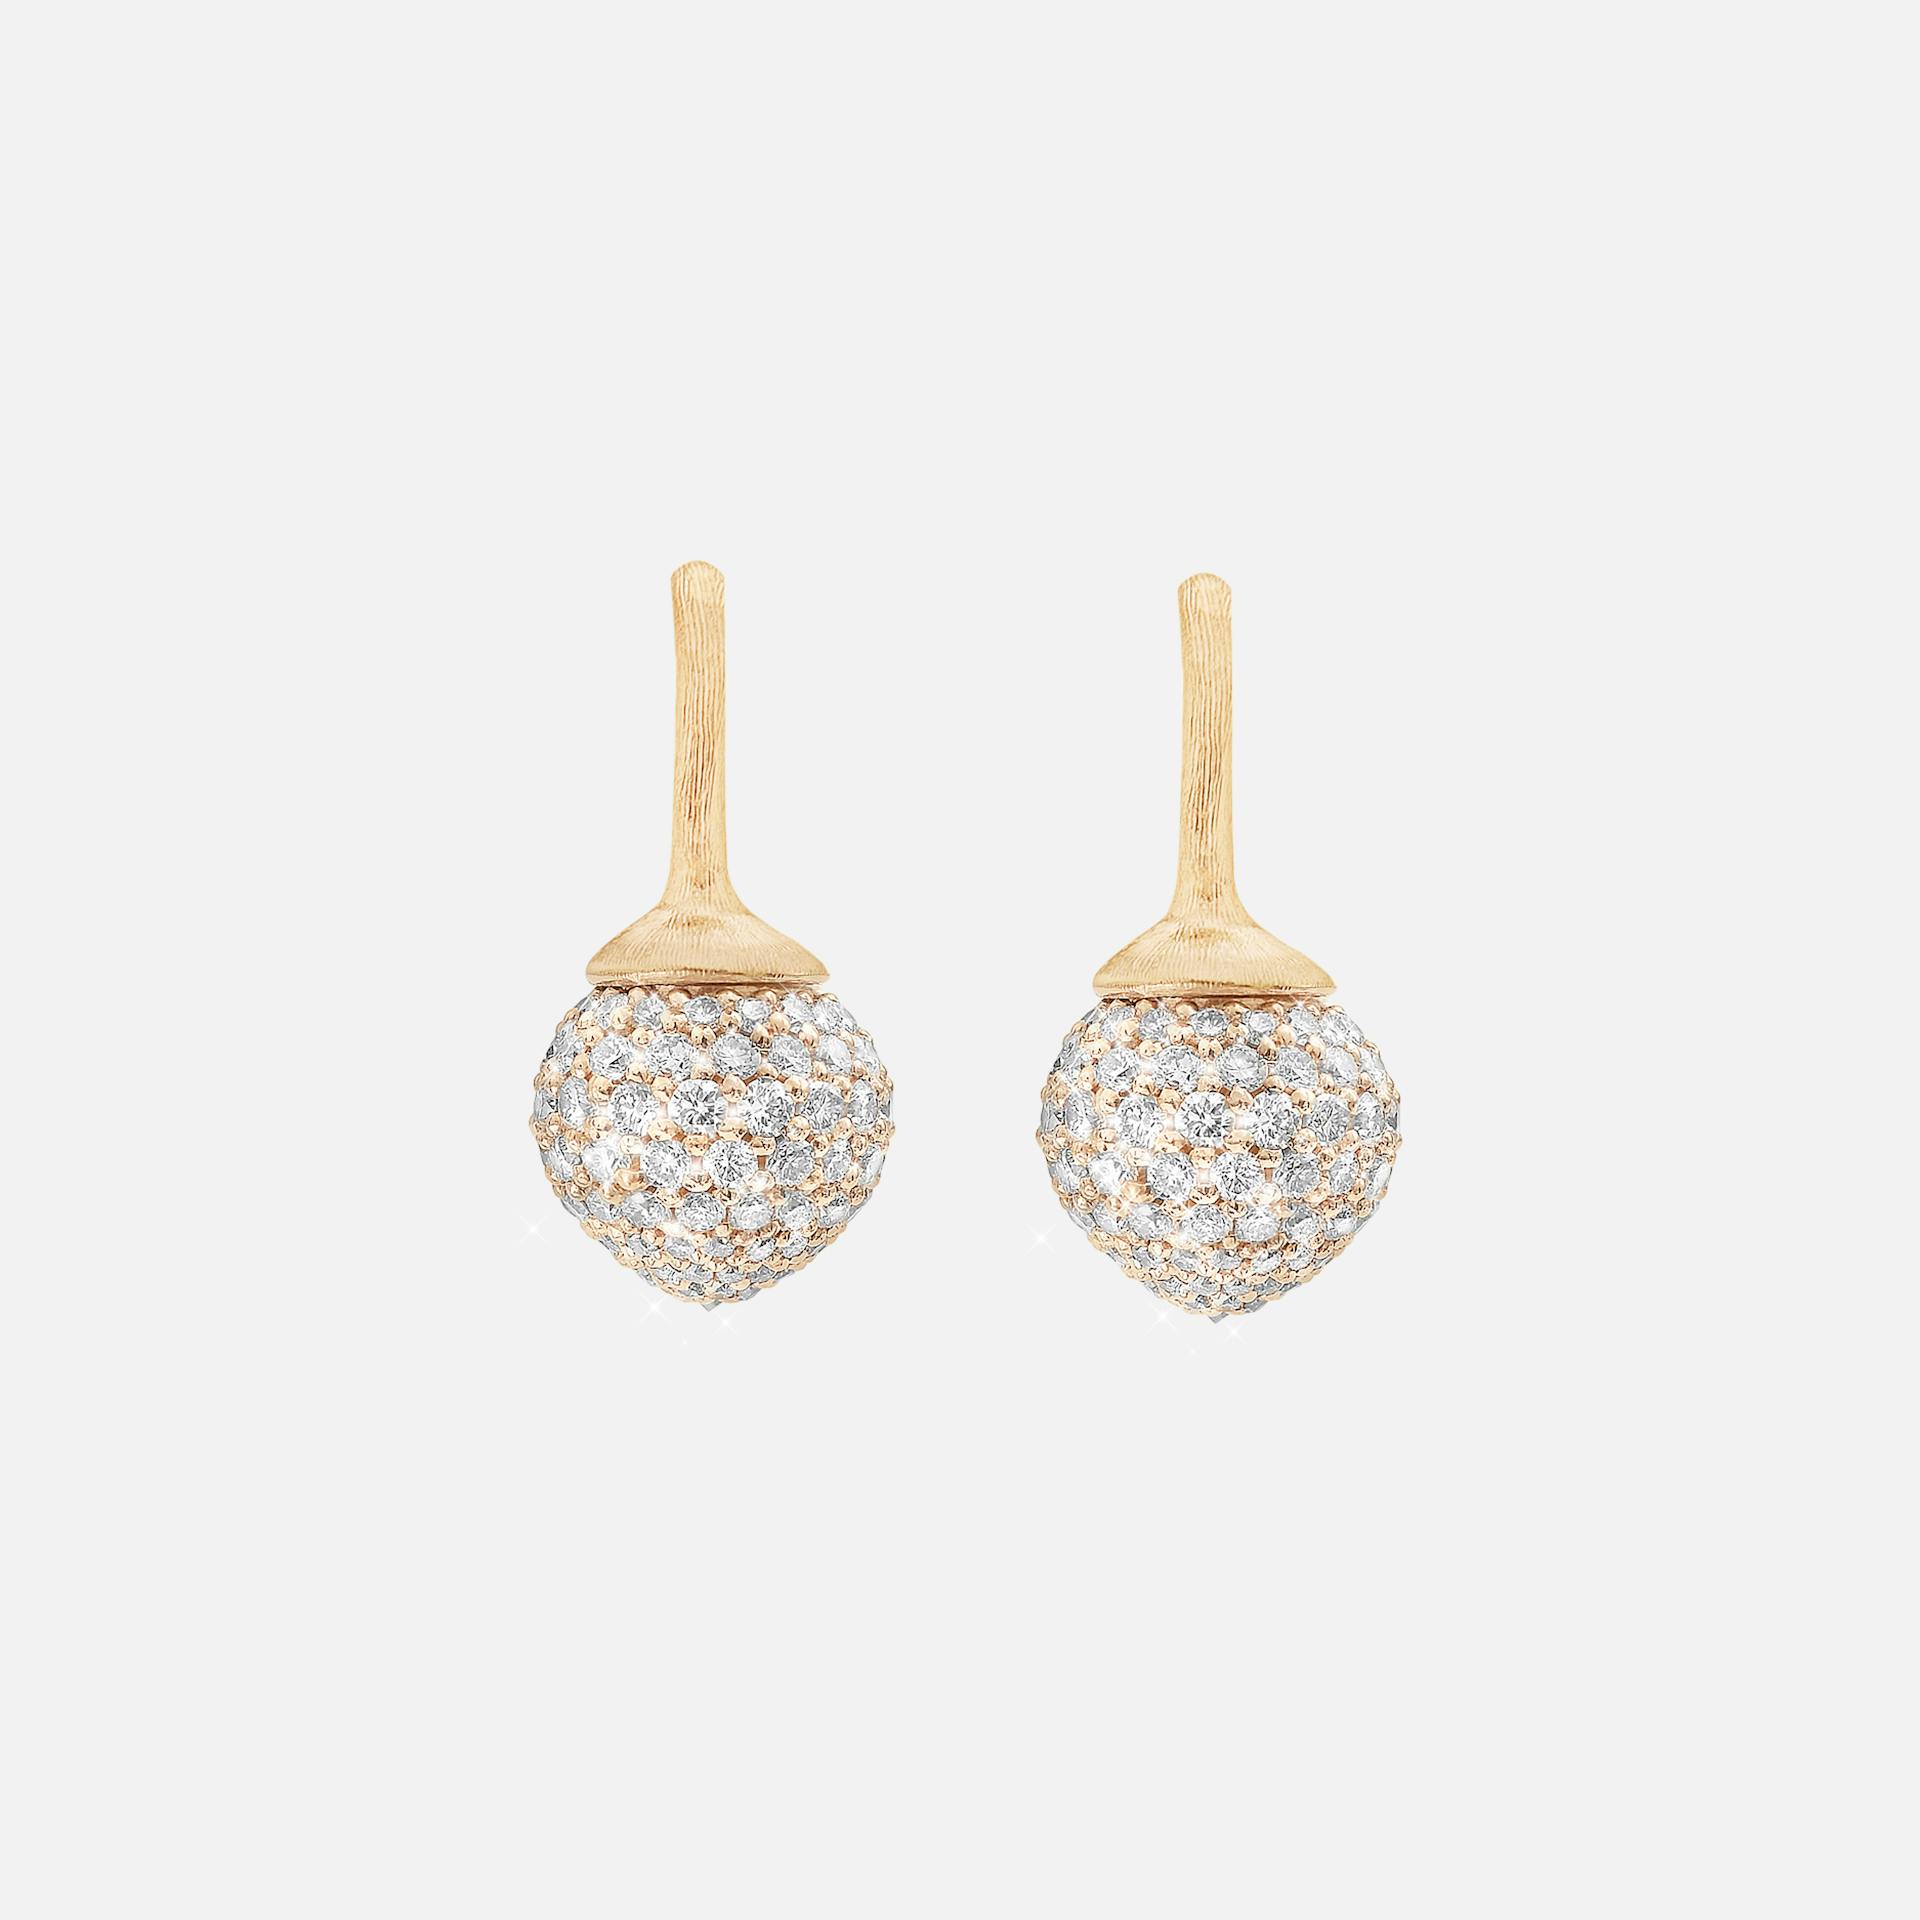 Dew drops earrings 18k gold with diamonds pavé 1.42 ct. TW. VS.